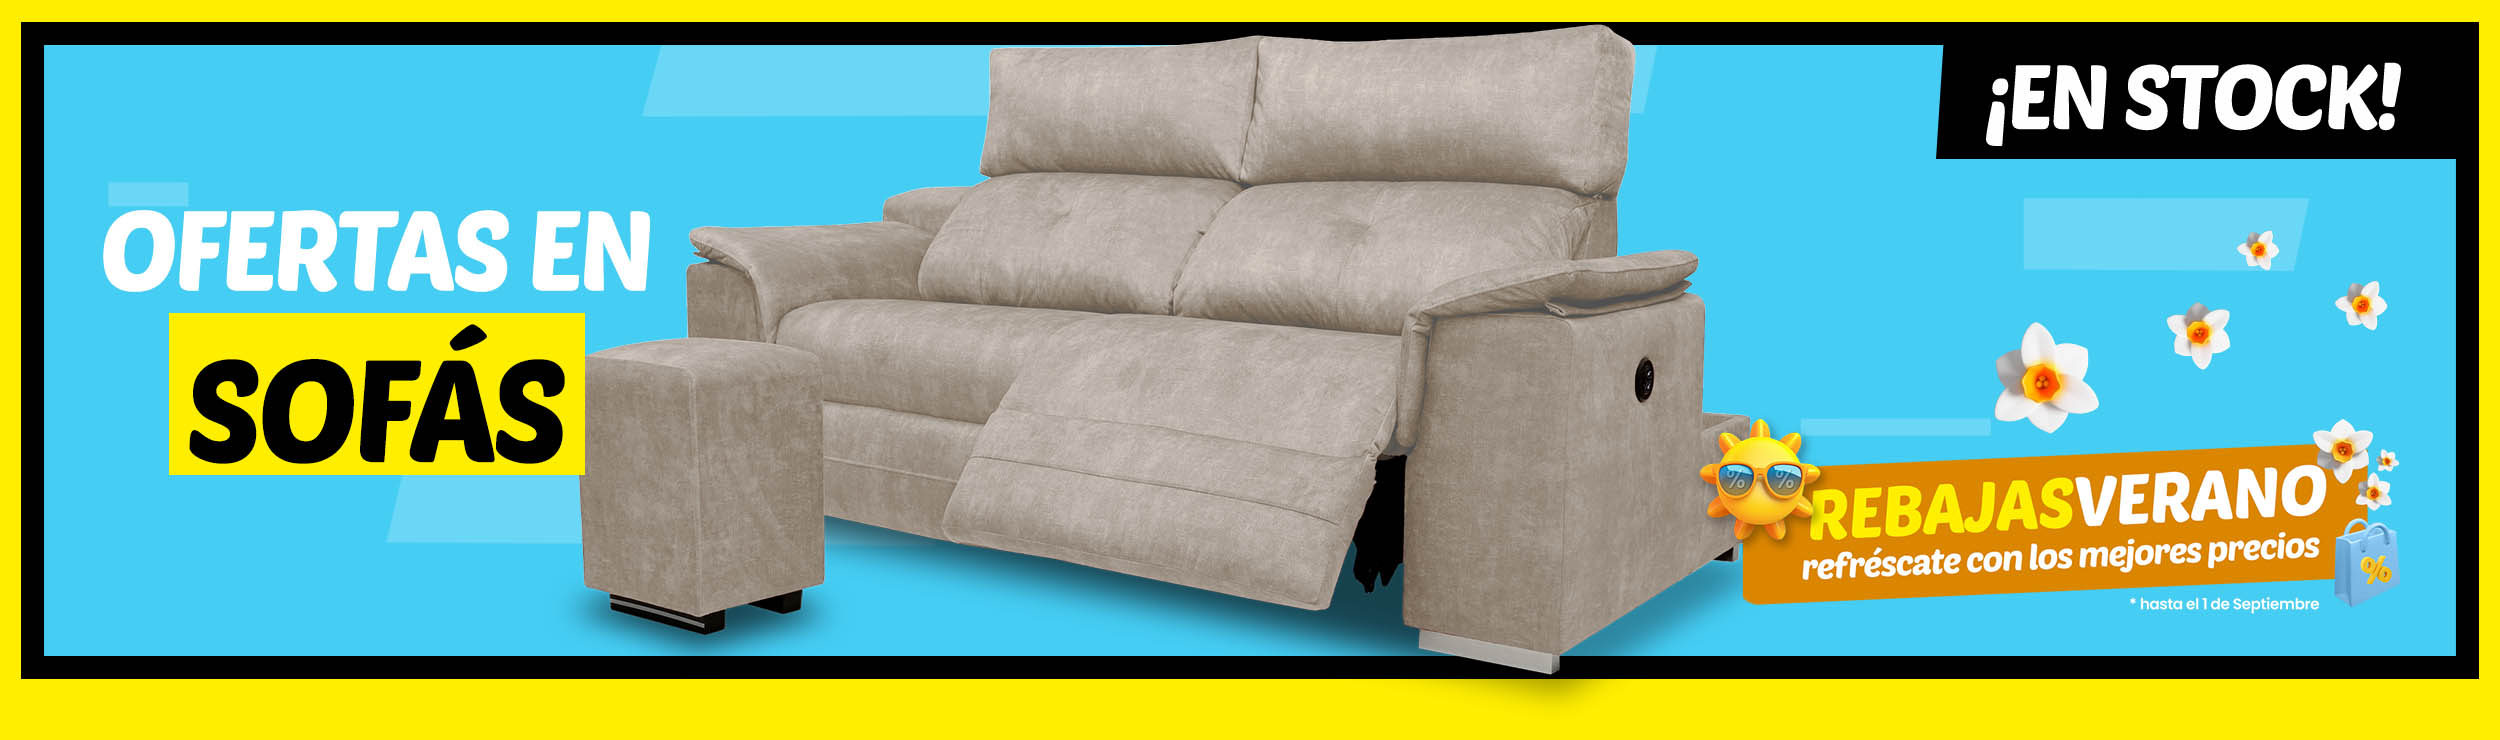 oferta-sofa-3pl